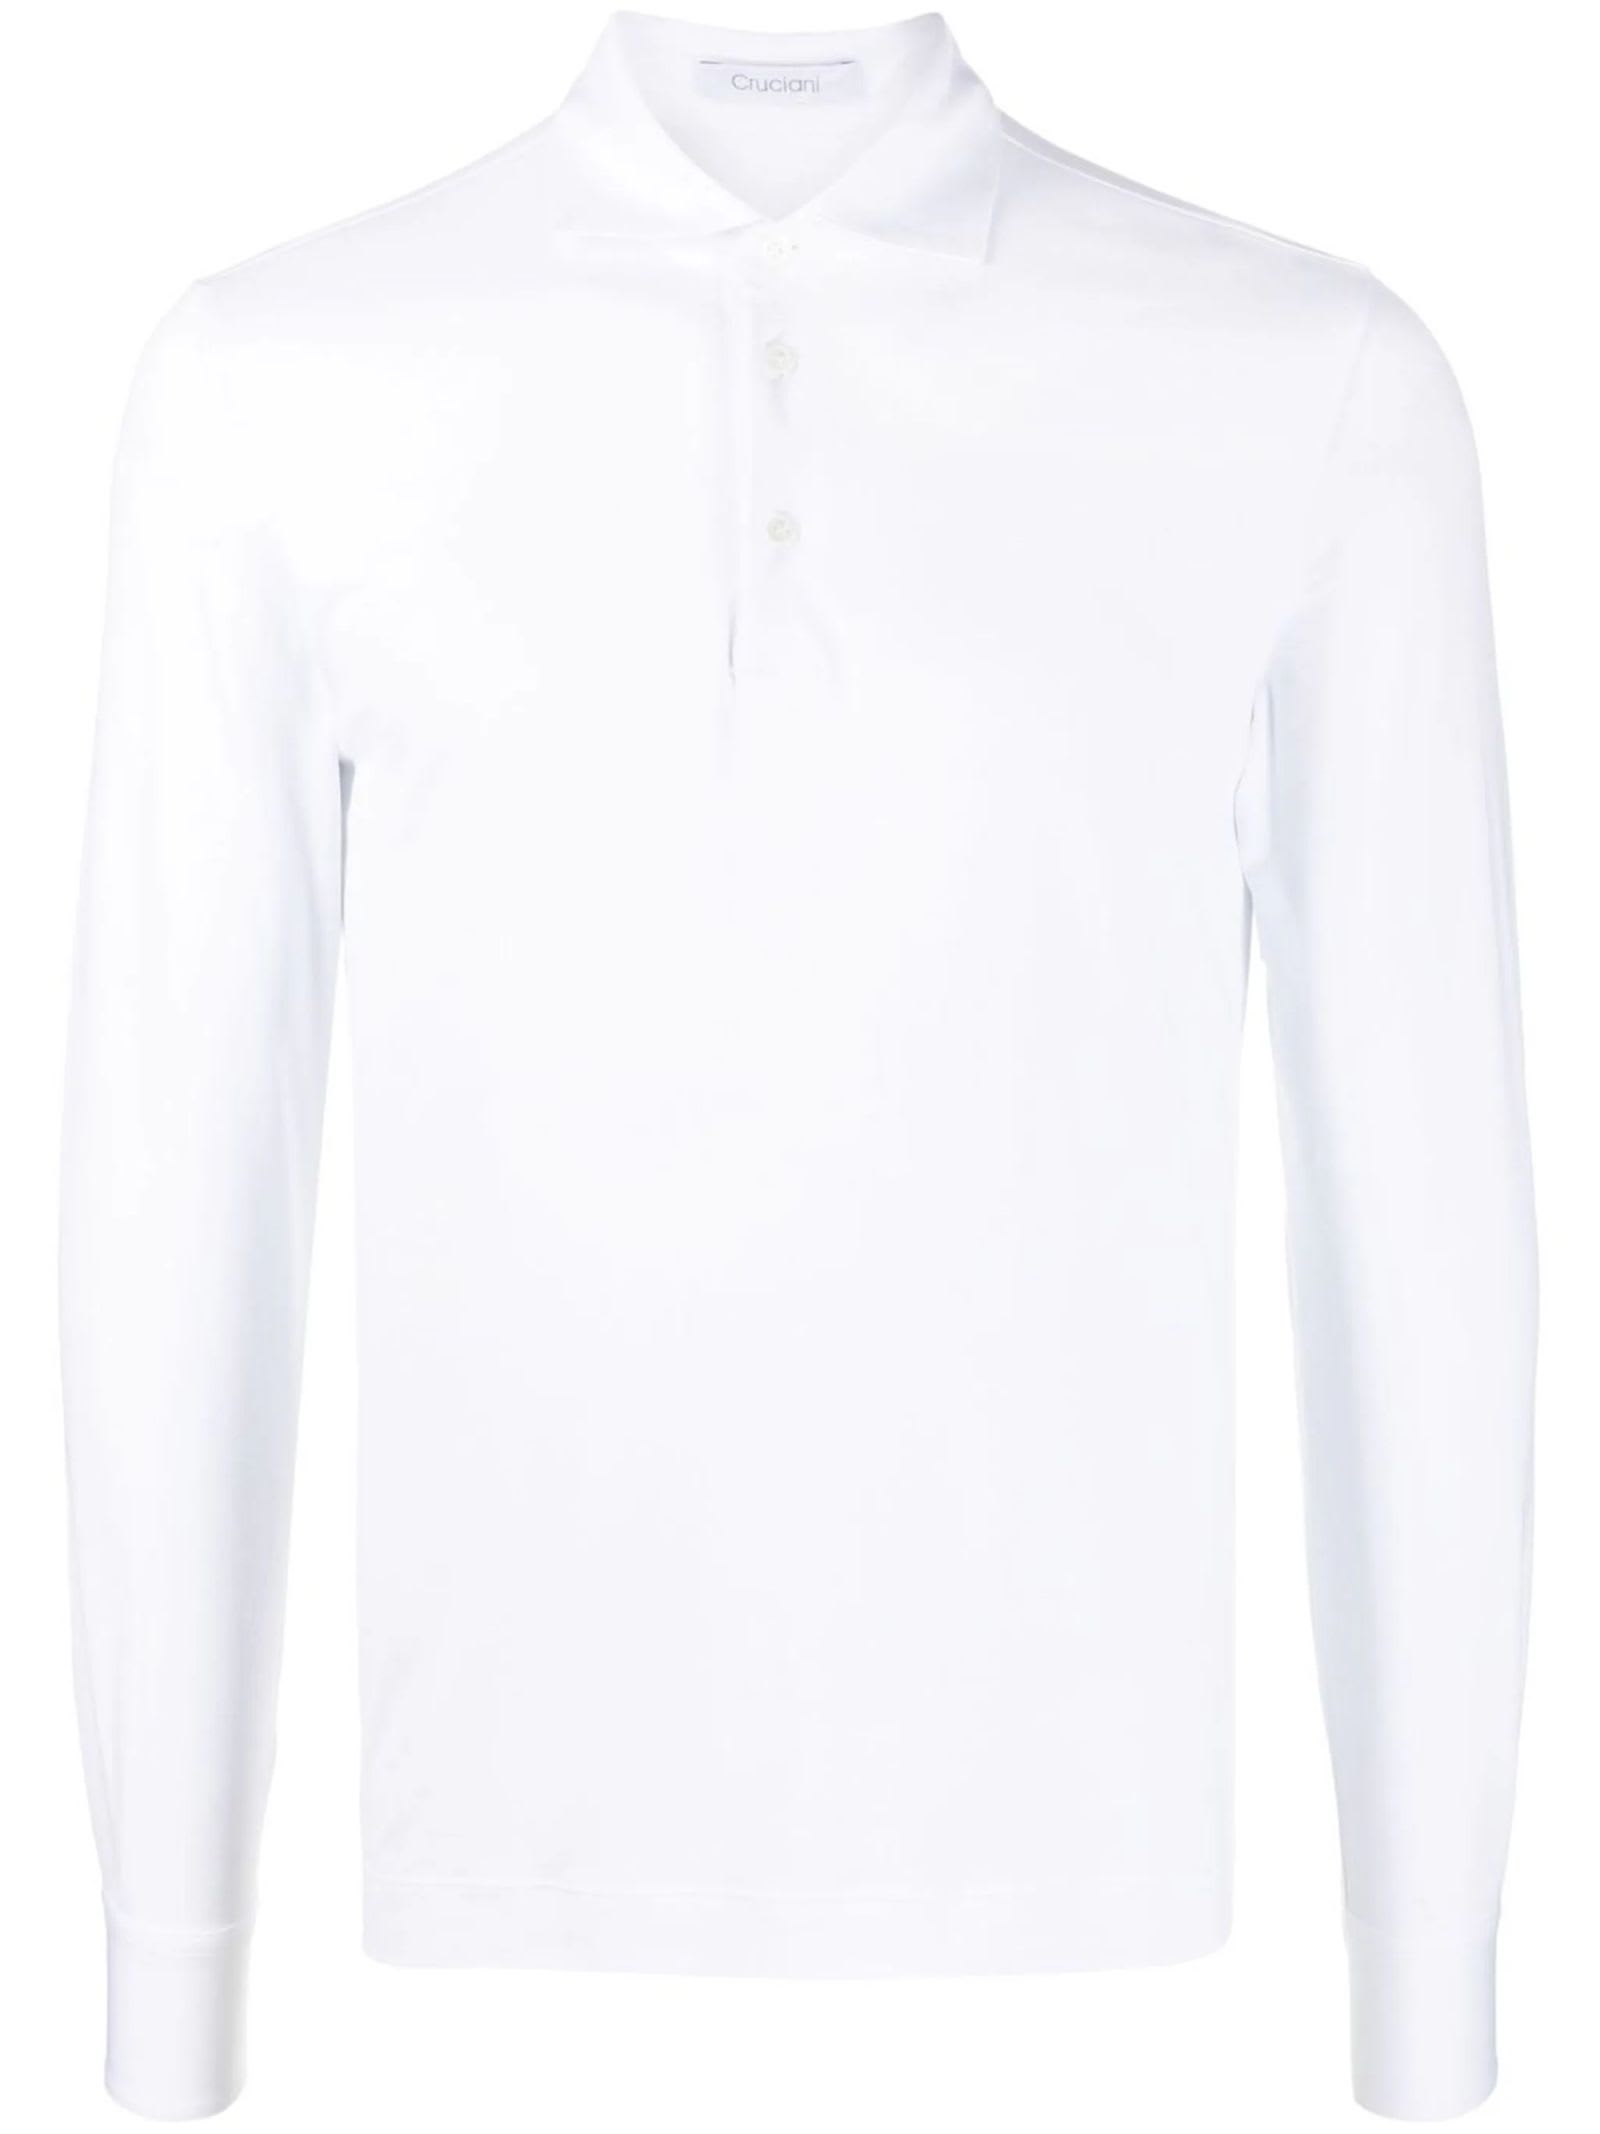 White Cotton Blend Polo Shirt